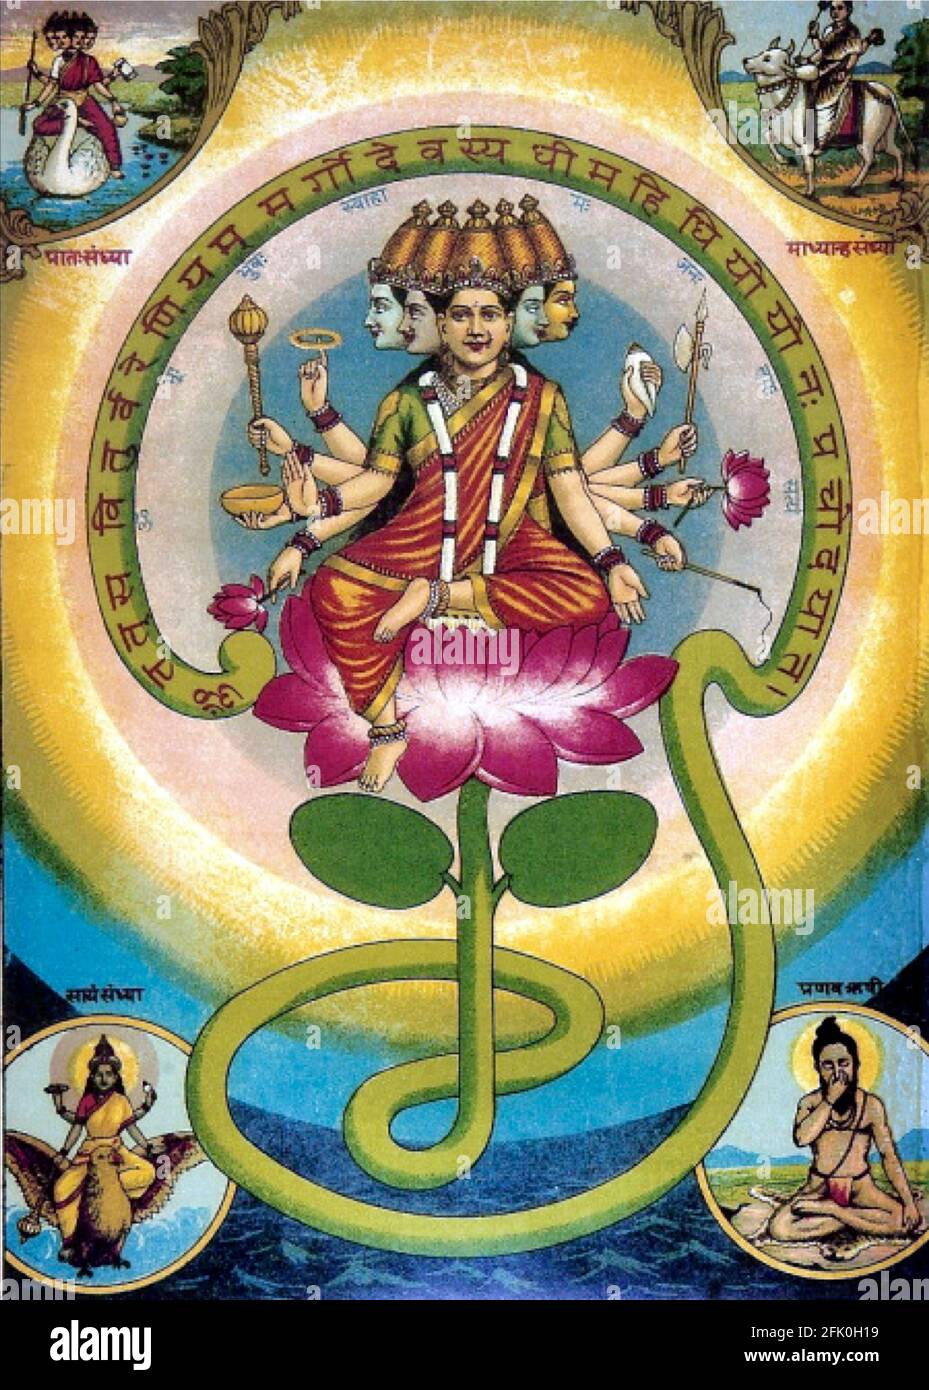 Raja Ravi Varma artwork - Gayatri mantra personified as a Goddess. Stock Photo